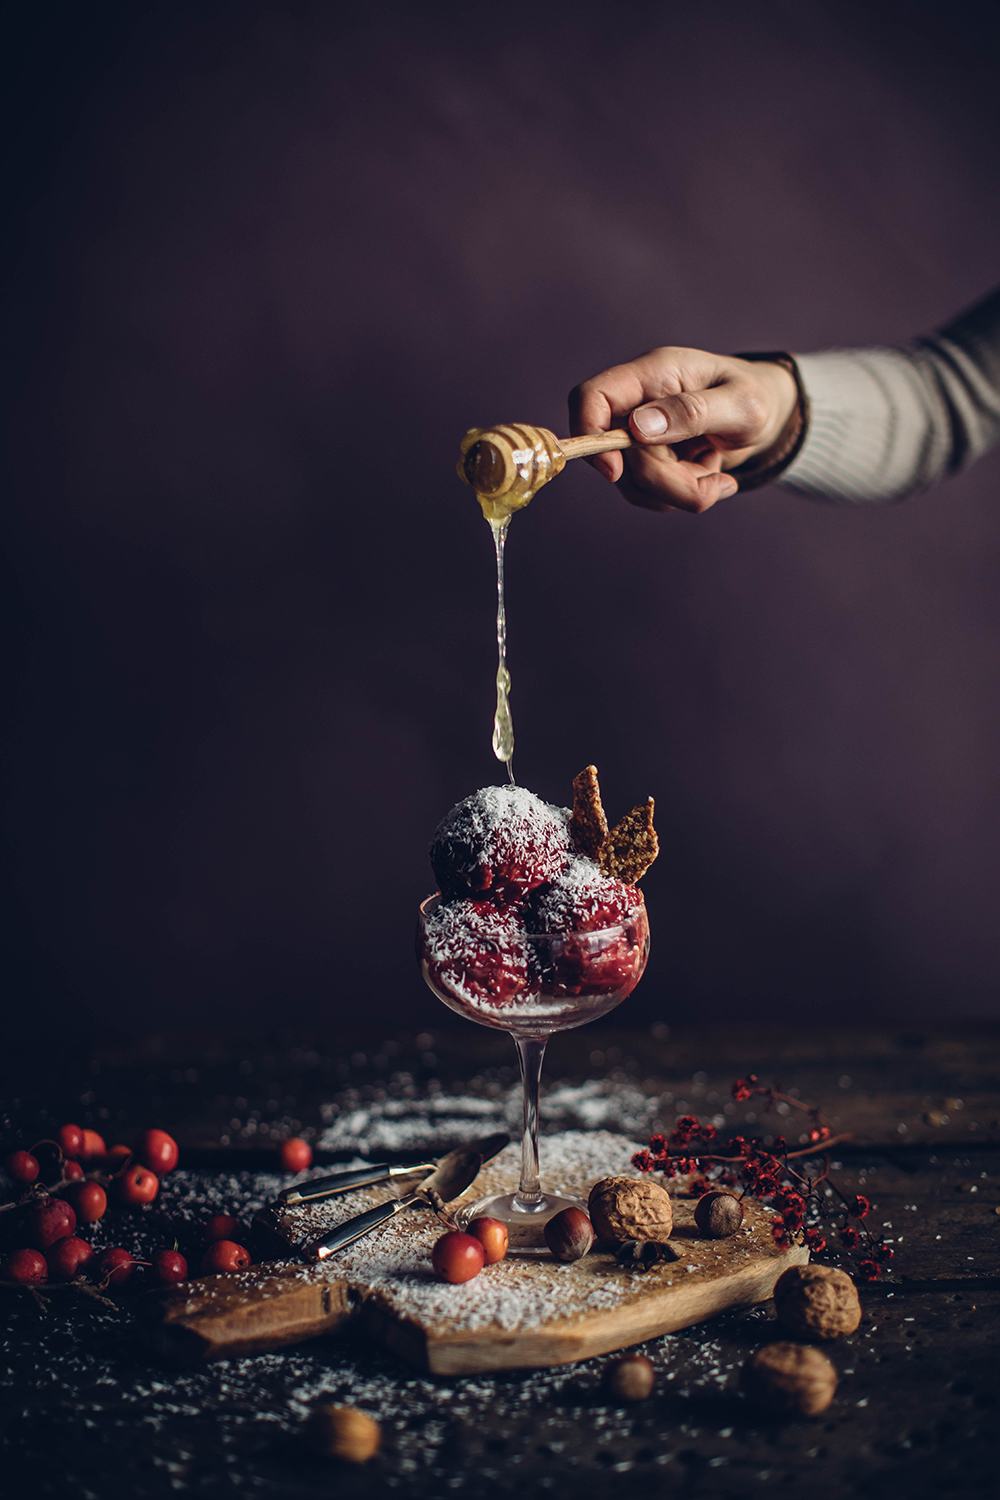 Honey-Cheesecake Ice Cream Snowballs with Almond Brittle & Lingonberry Jam